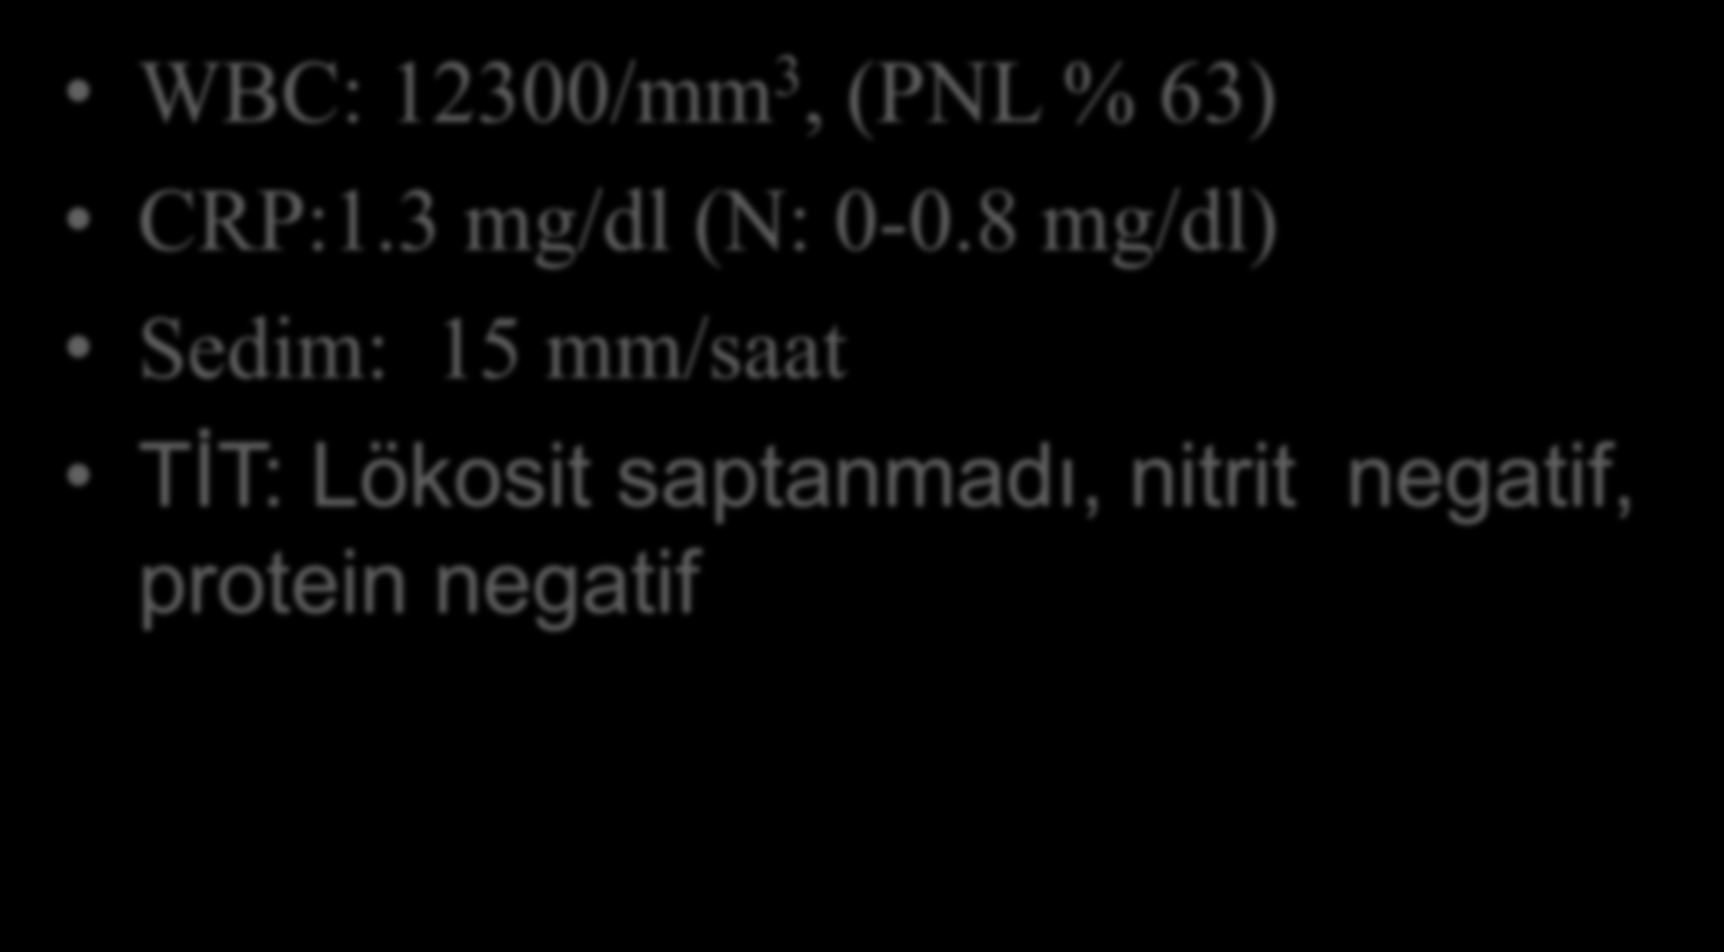 Laboratuvar Bulguları 1. hafta WBC: 12300/mm 3, (PNL % 63) CRP:1.3 mg/dl (N: 0-0.